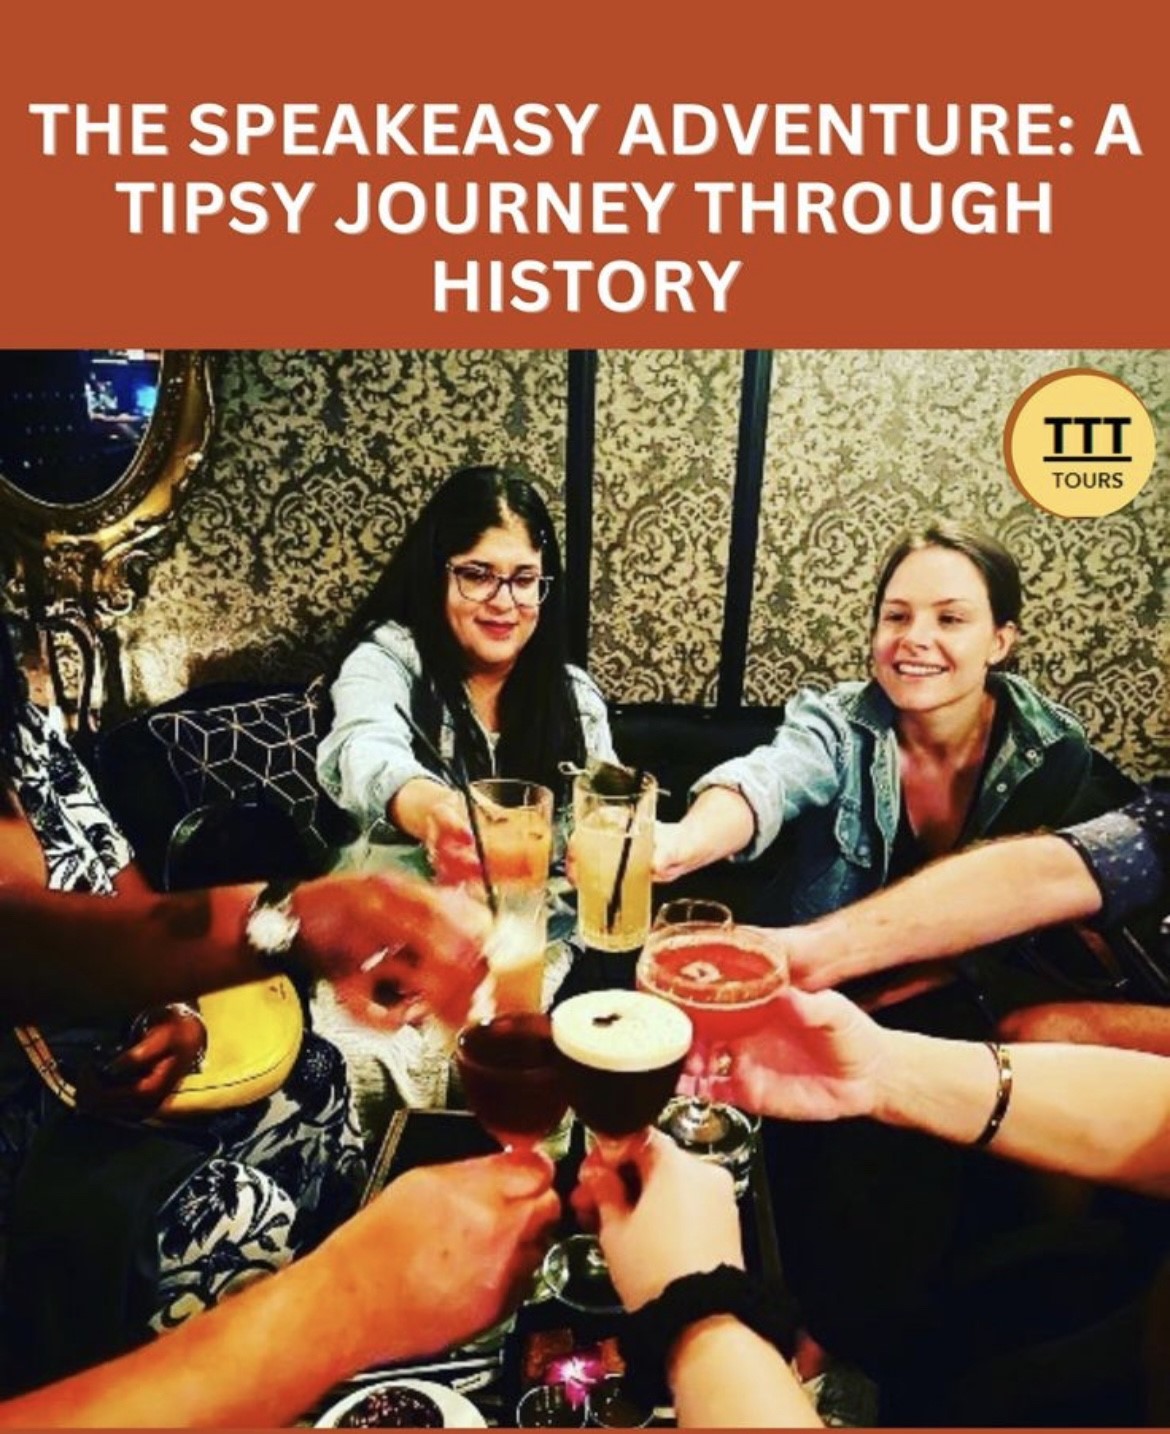 The Speakeasy Adventure: A Tipsy Trip Through History  on ene. 01, 00:00@Cravath Swaine and Moore - Compra entradas y obtén información enTelltale Tours 